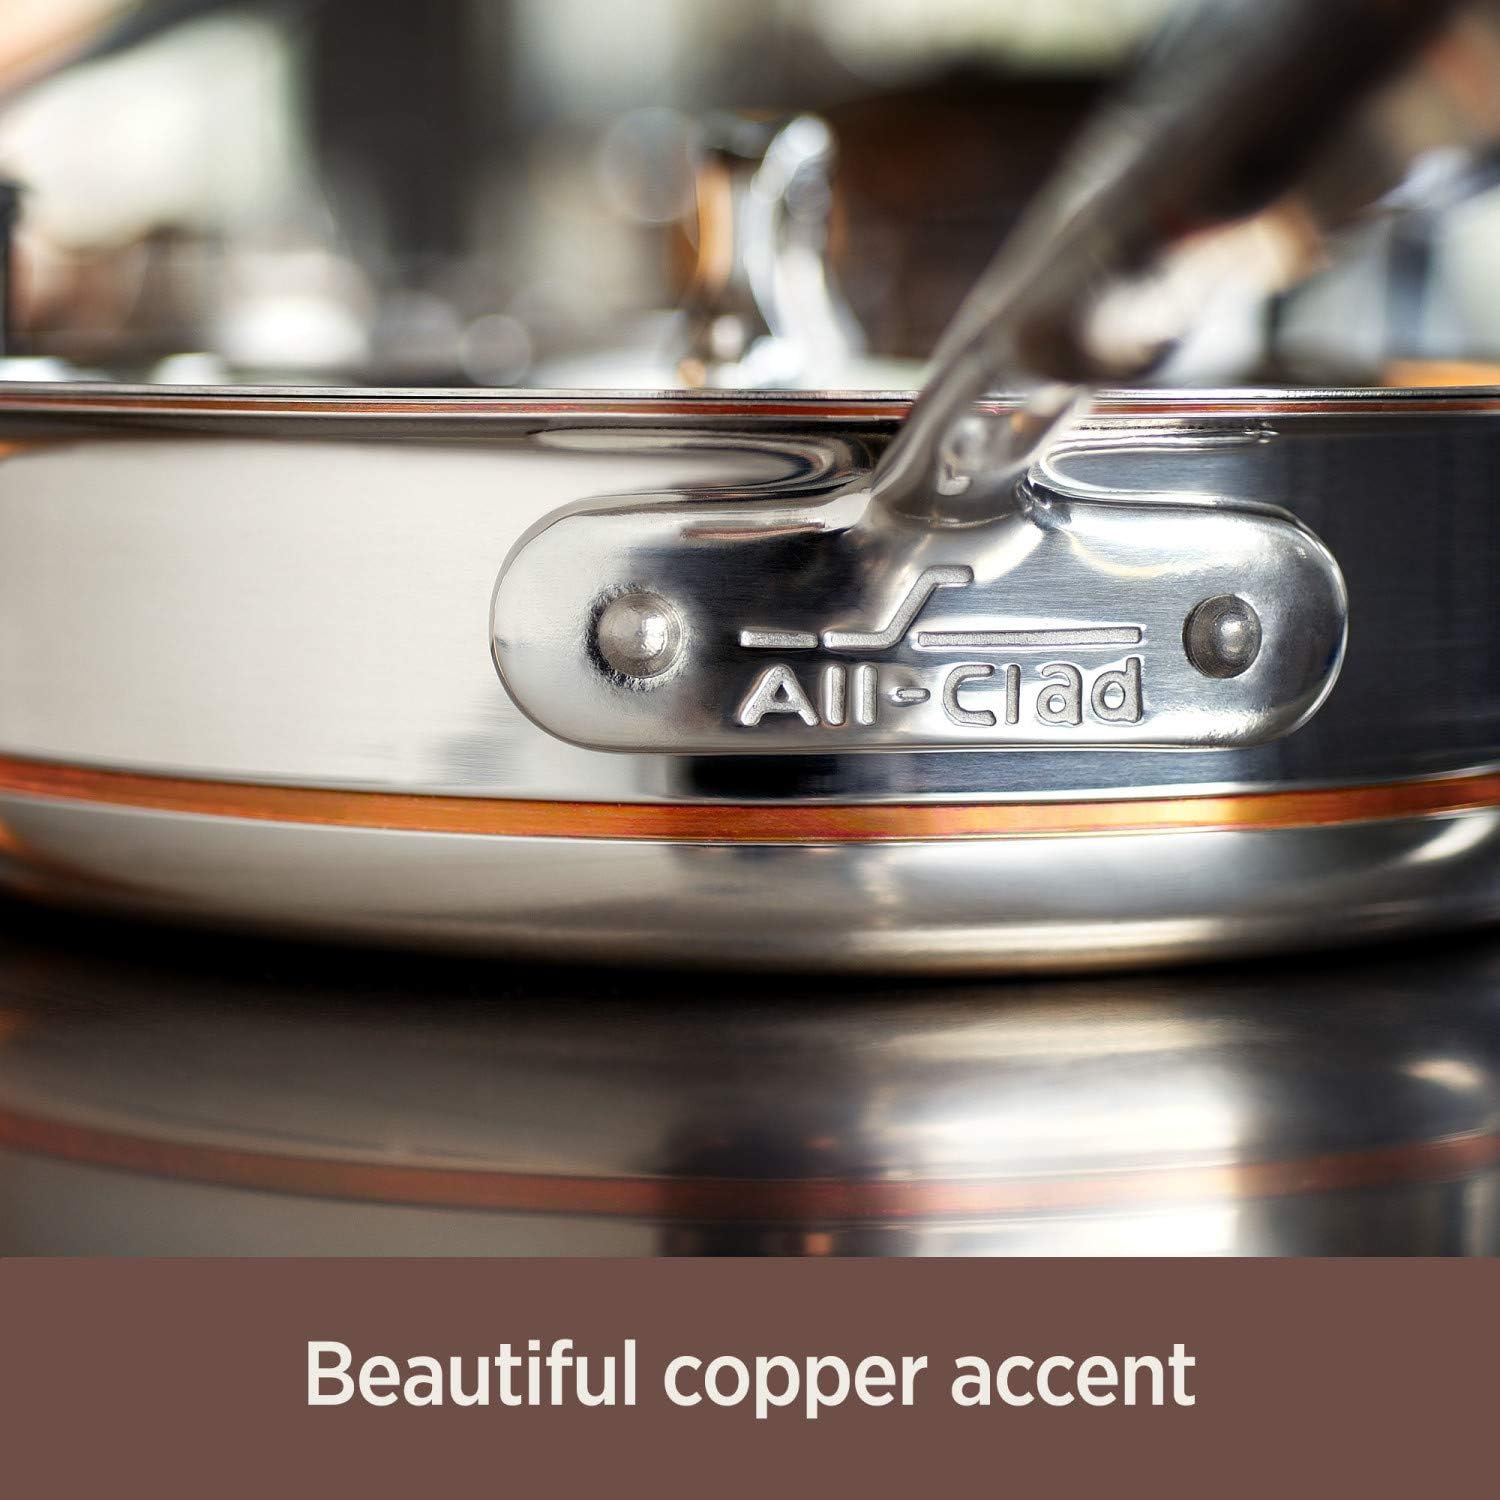 All-Clad Copper Core 3-Qt. Sauce Pan